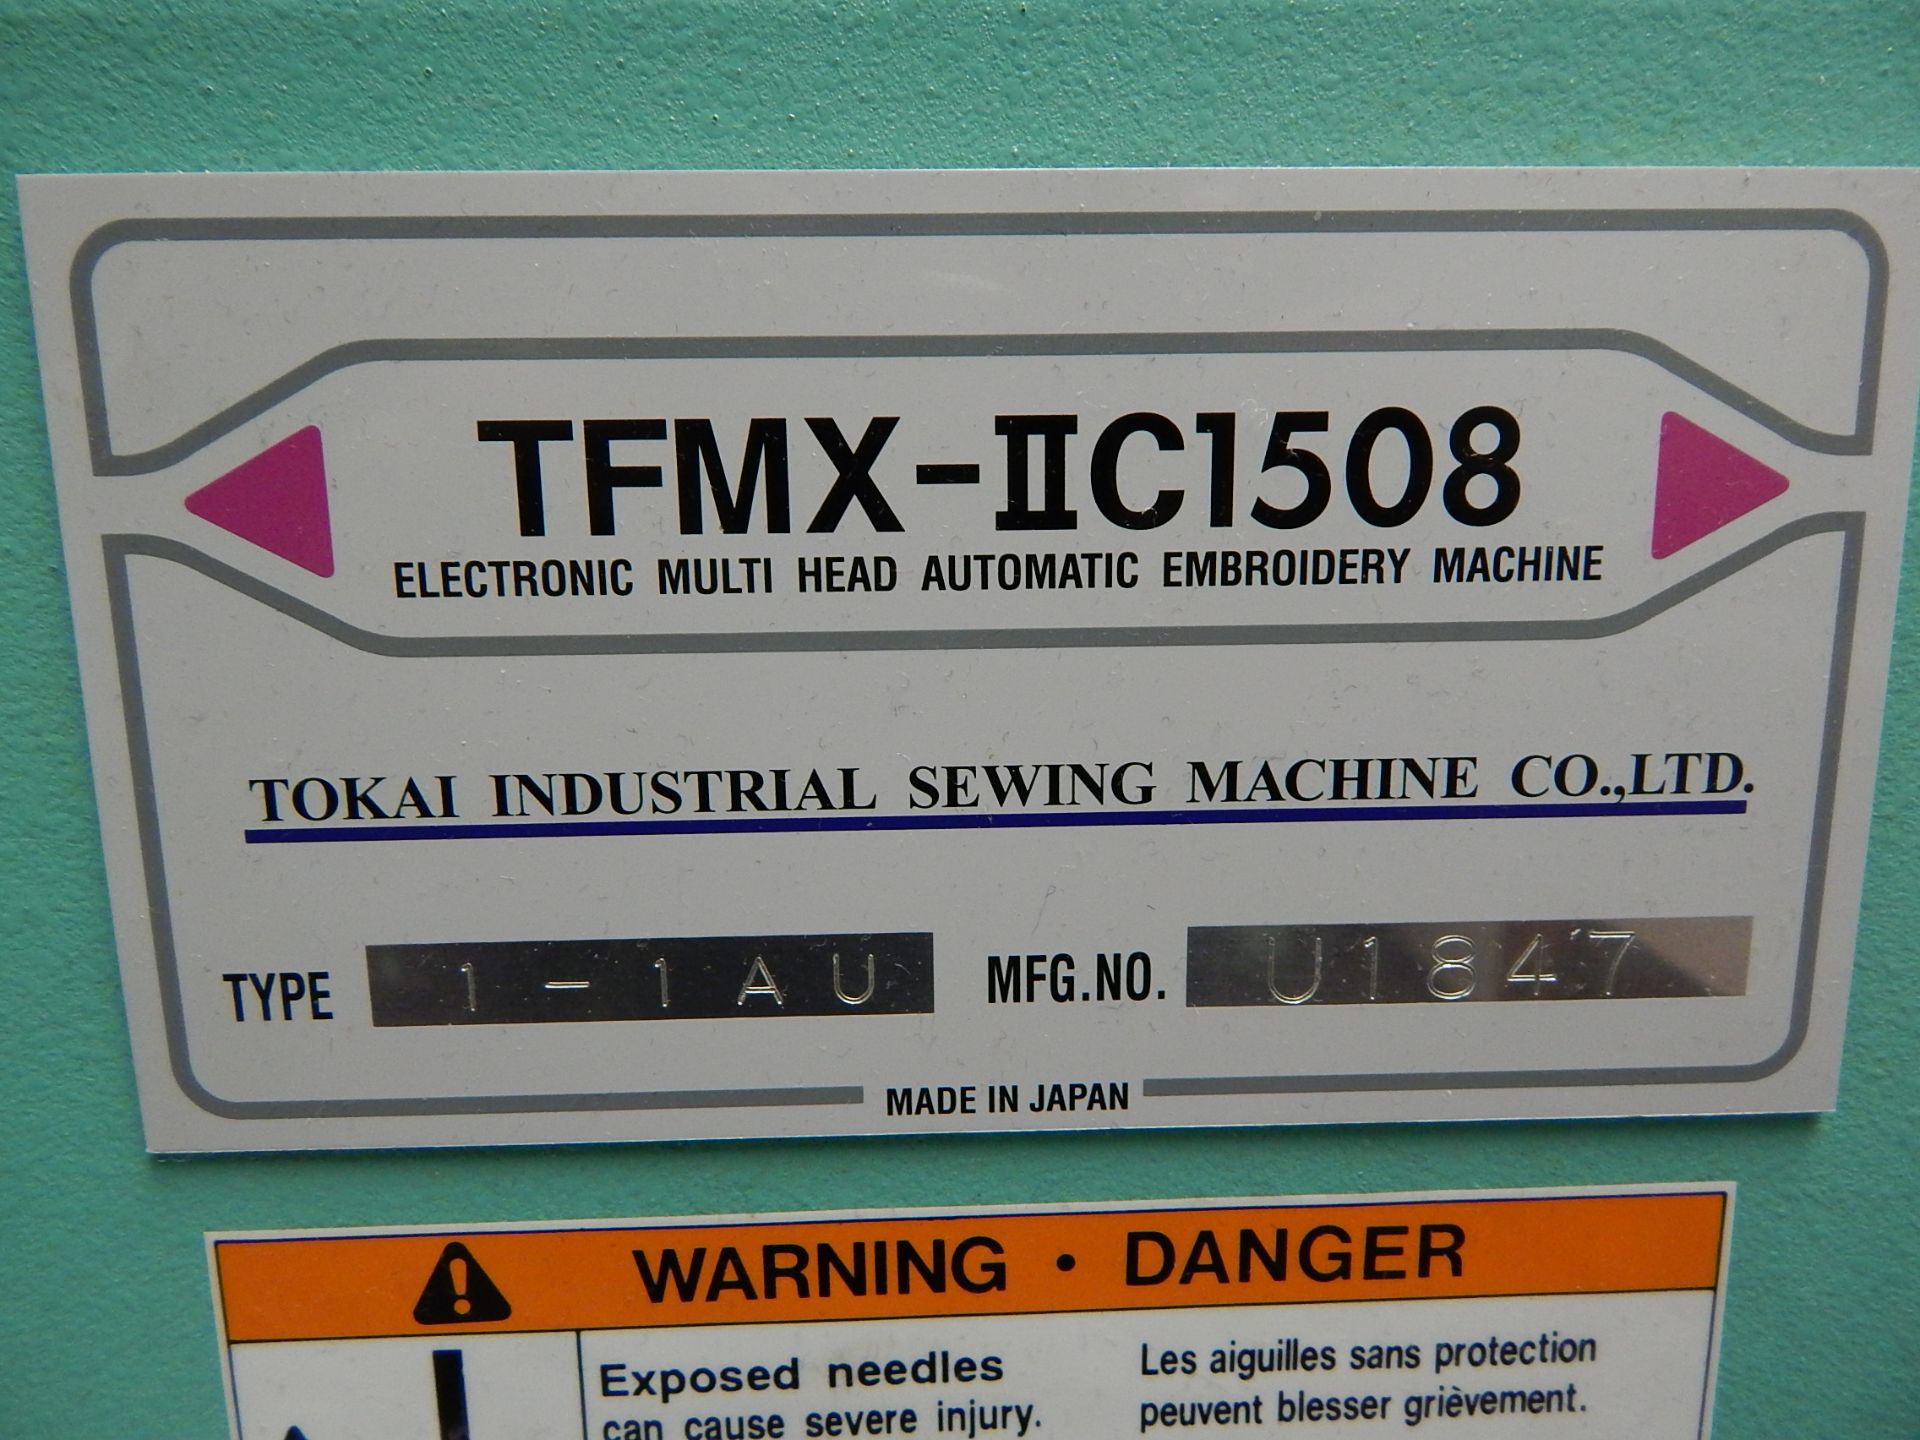 TAJIMA Electronic Multi Head Automatic Embroidery Machine, Model TFMX-IIC1508, (8) Sewing Heads with - Image 8 of 11